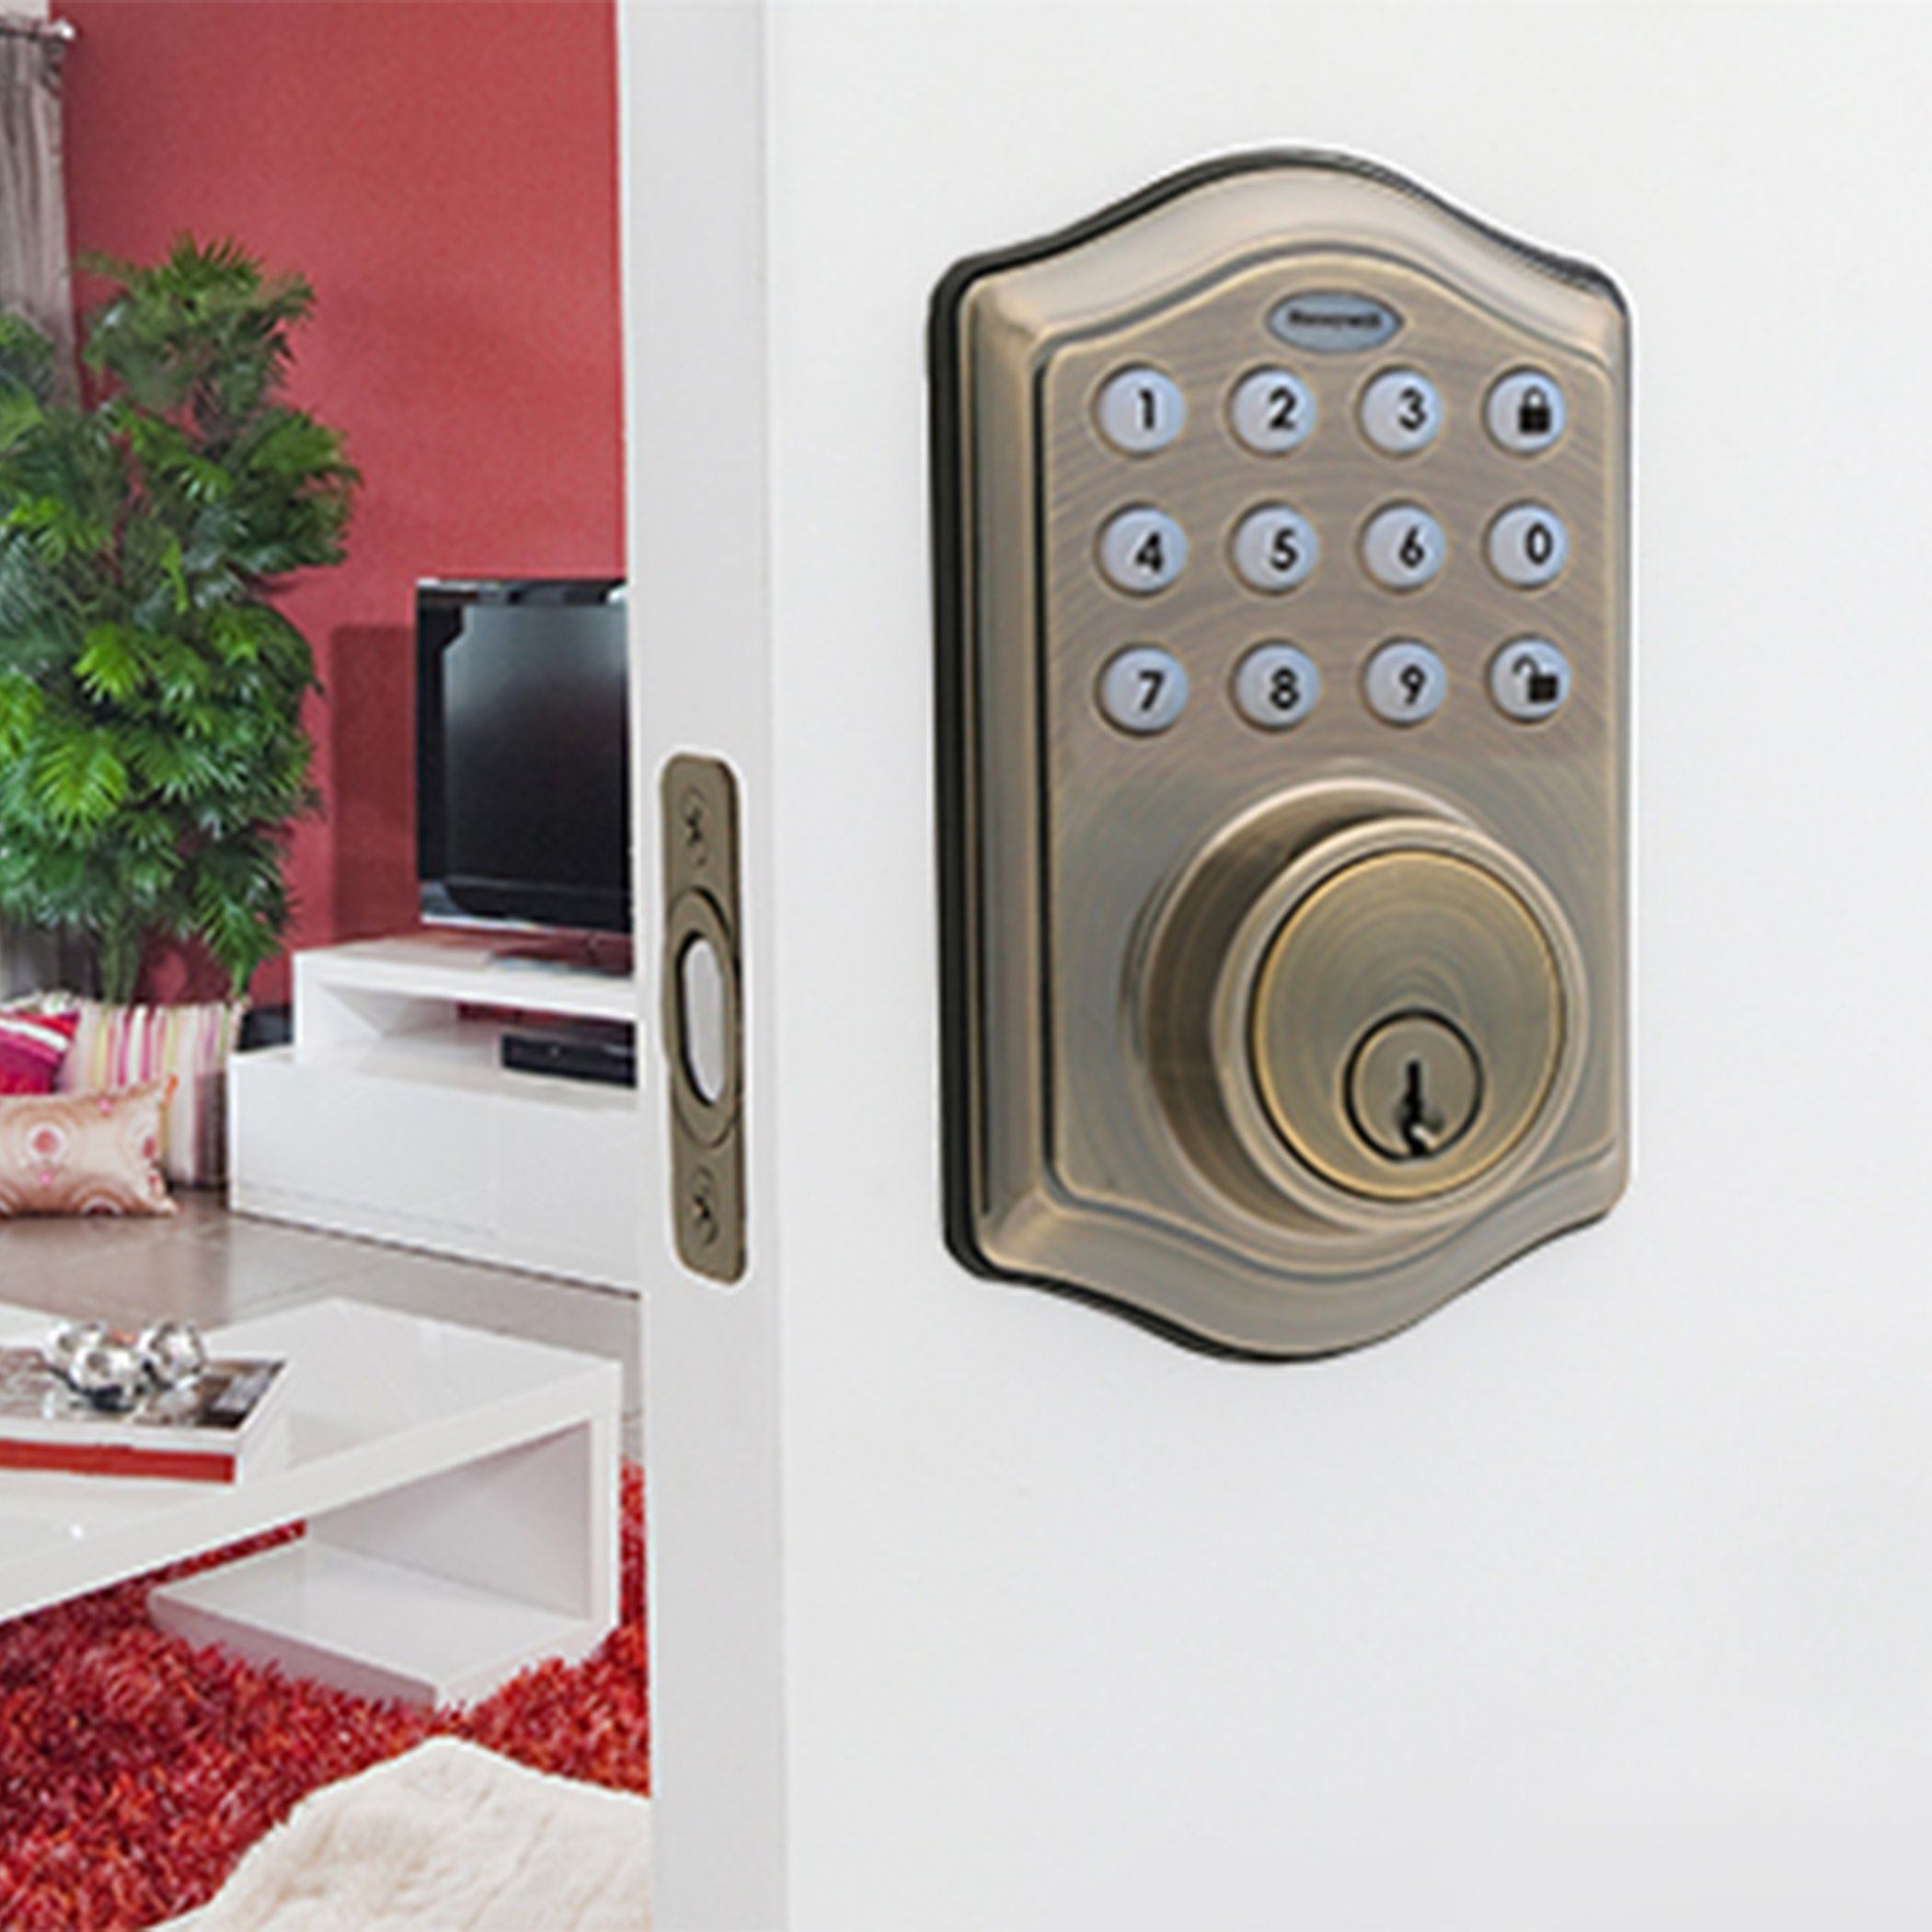 Honeywell 8712109 Electronic Deadbolt Door Lock with Keypad in Antique Brass